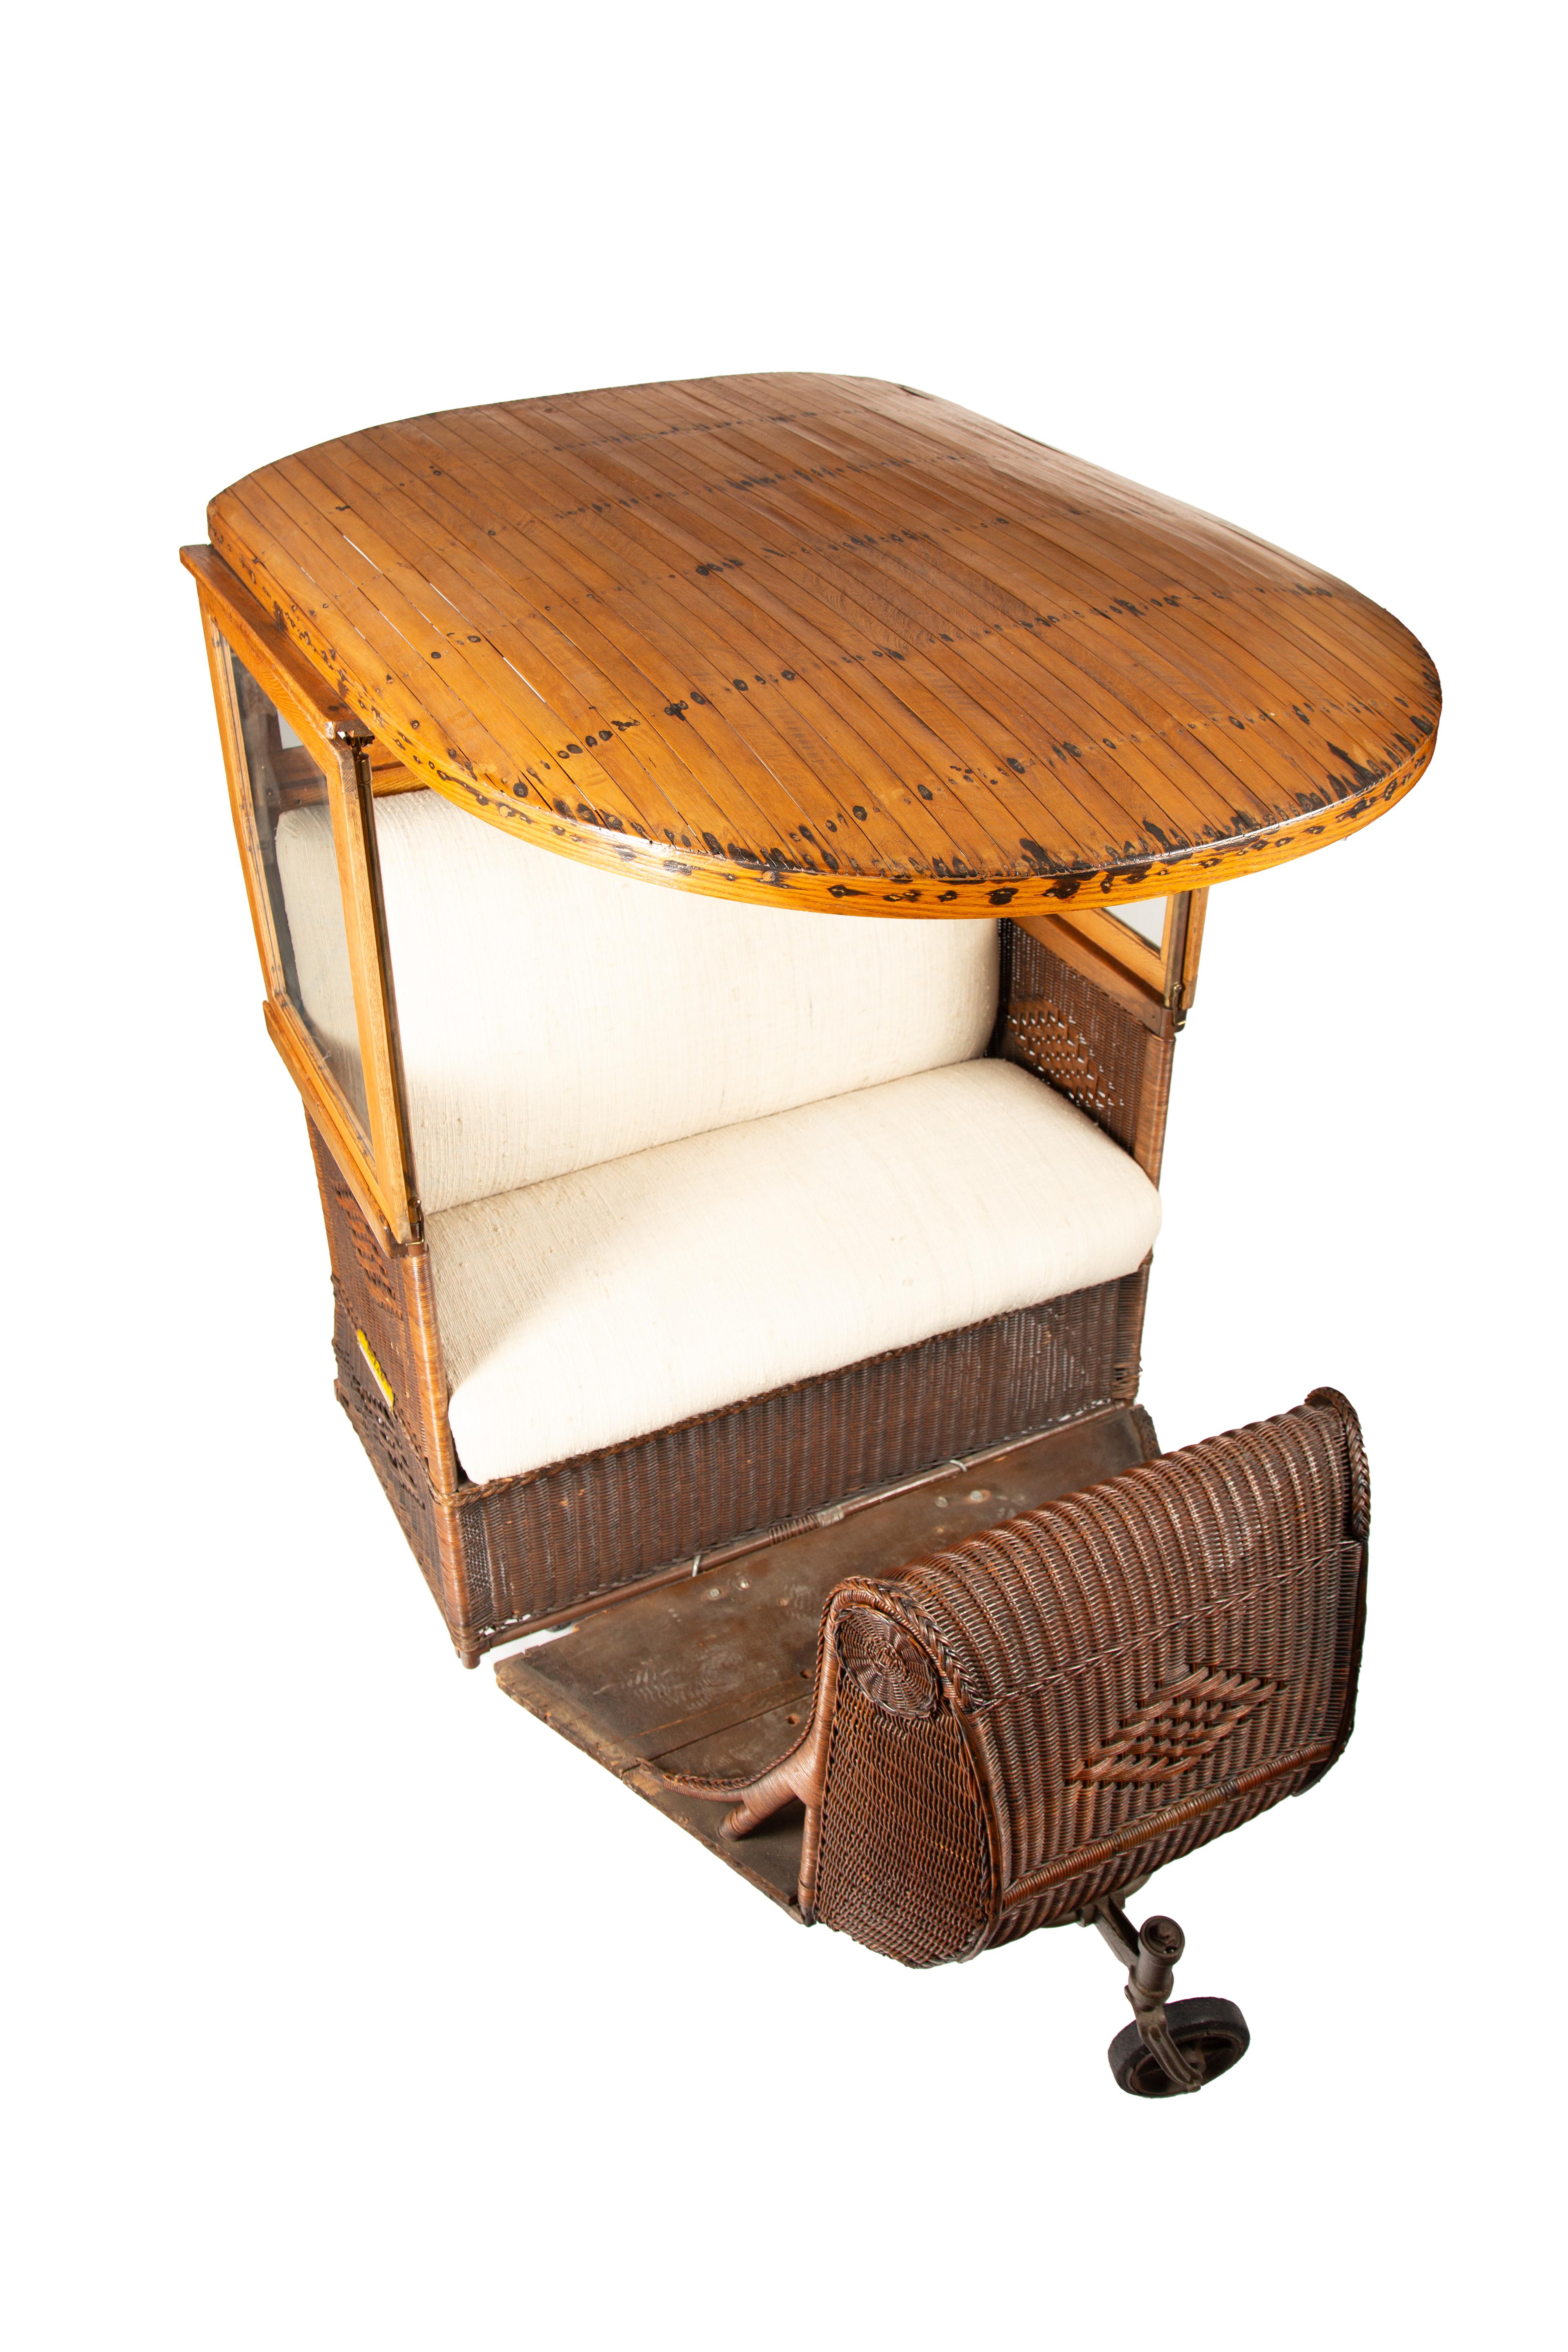 Rattan Vintage Ocean Rolling Chair Co. Inc. Boardwalk Cart: A Timeless Seaside Treasure For Sale